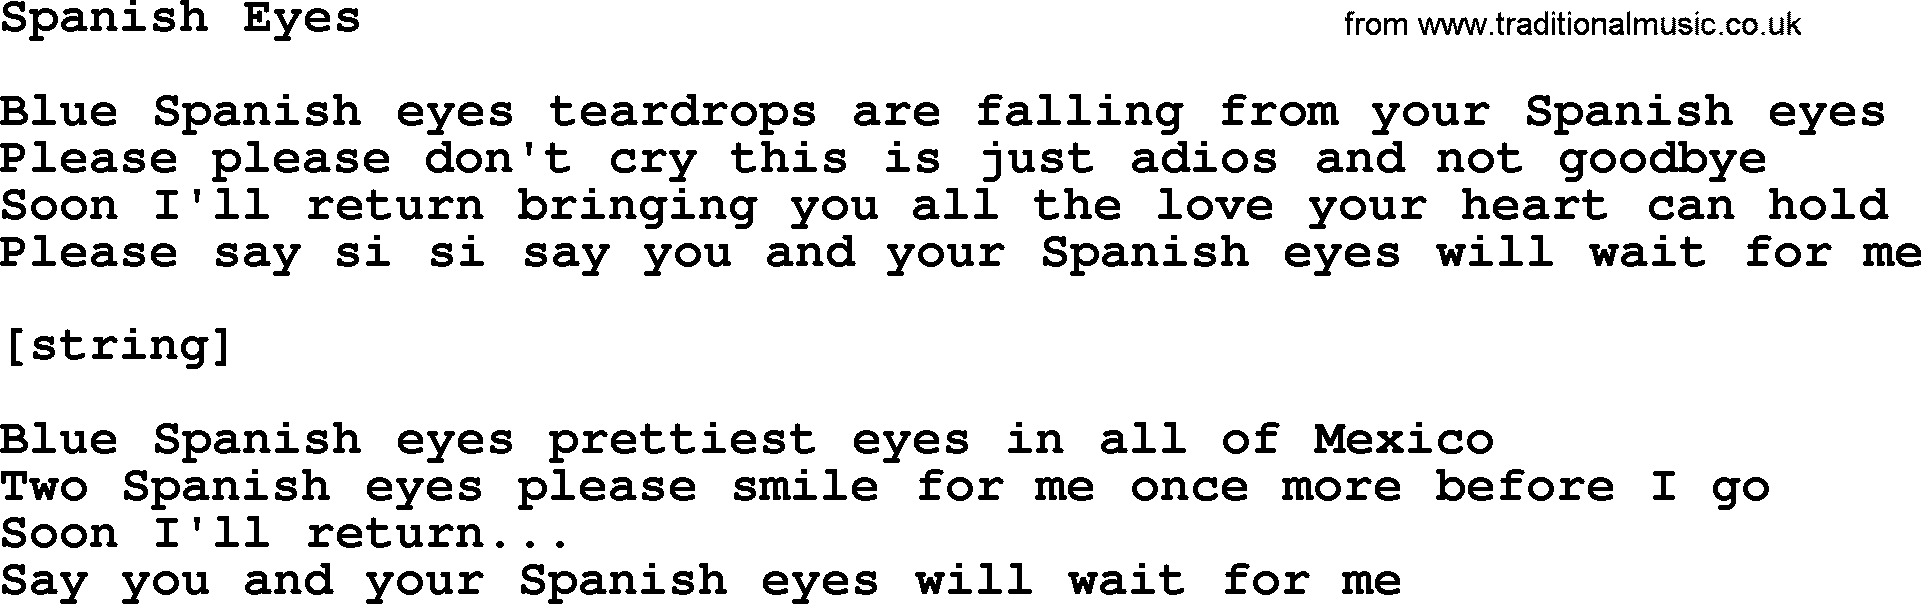 Willie Nelson song: Spanish Eyes lyrics